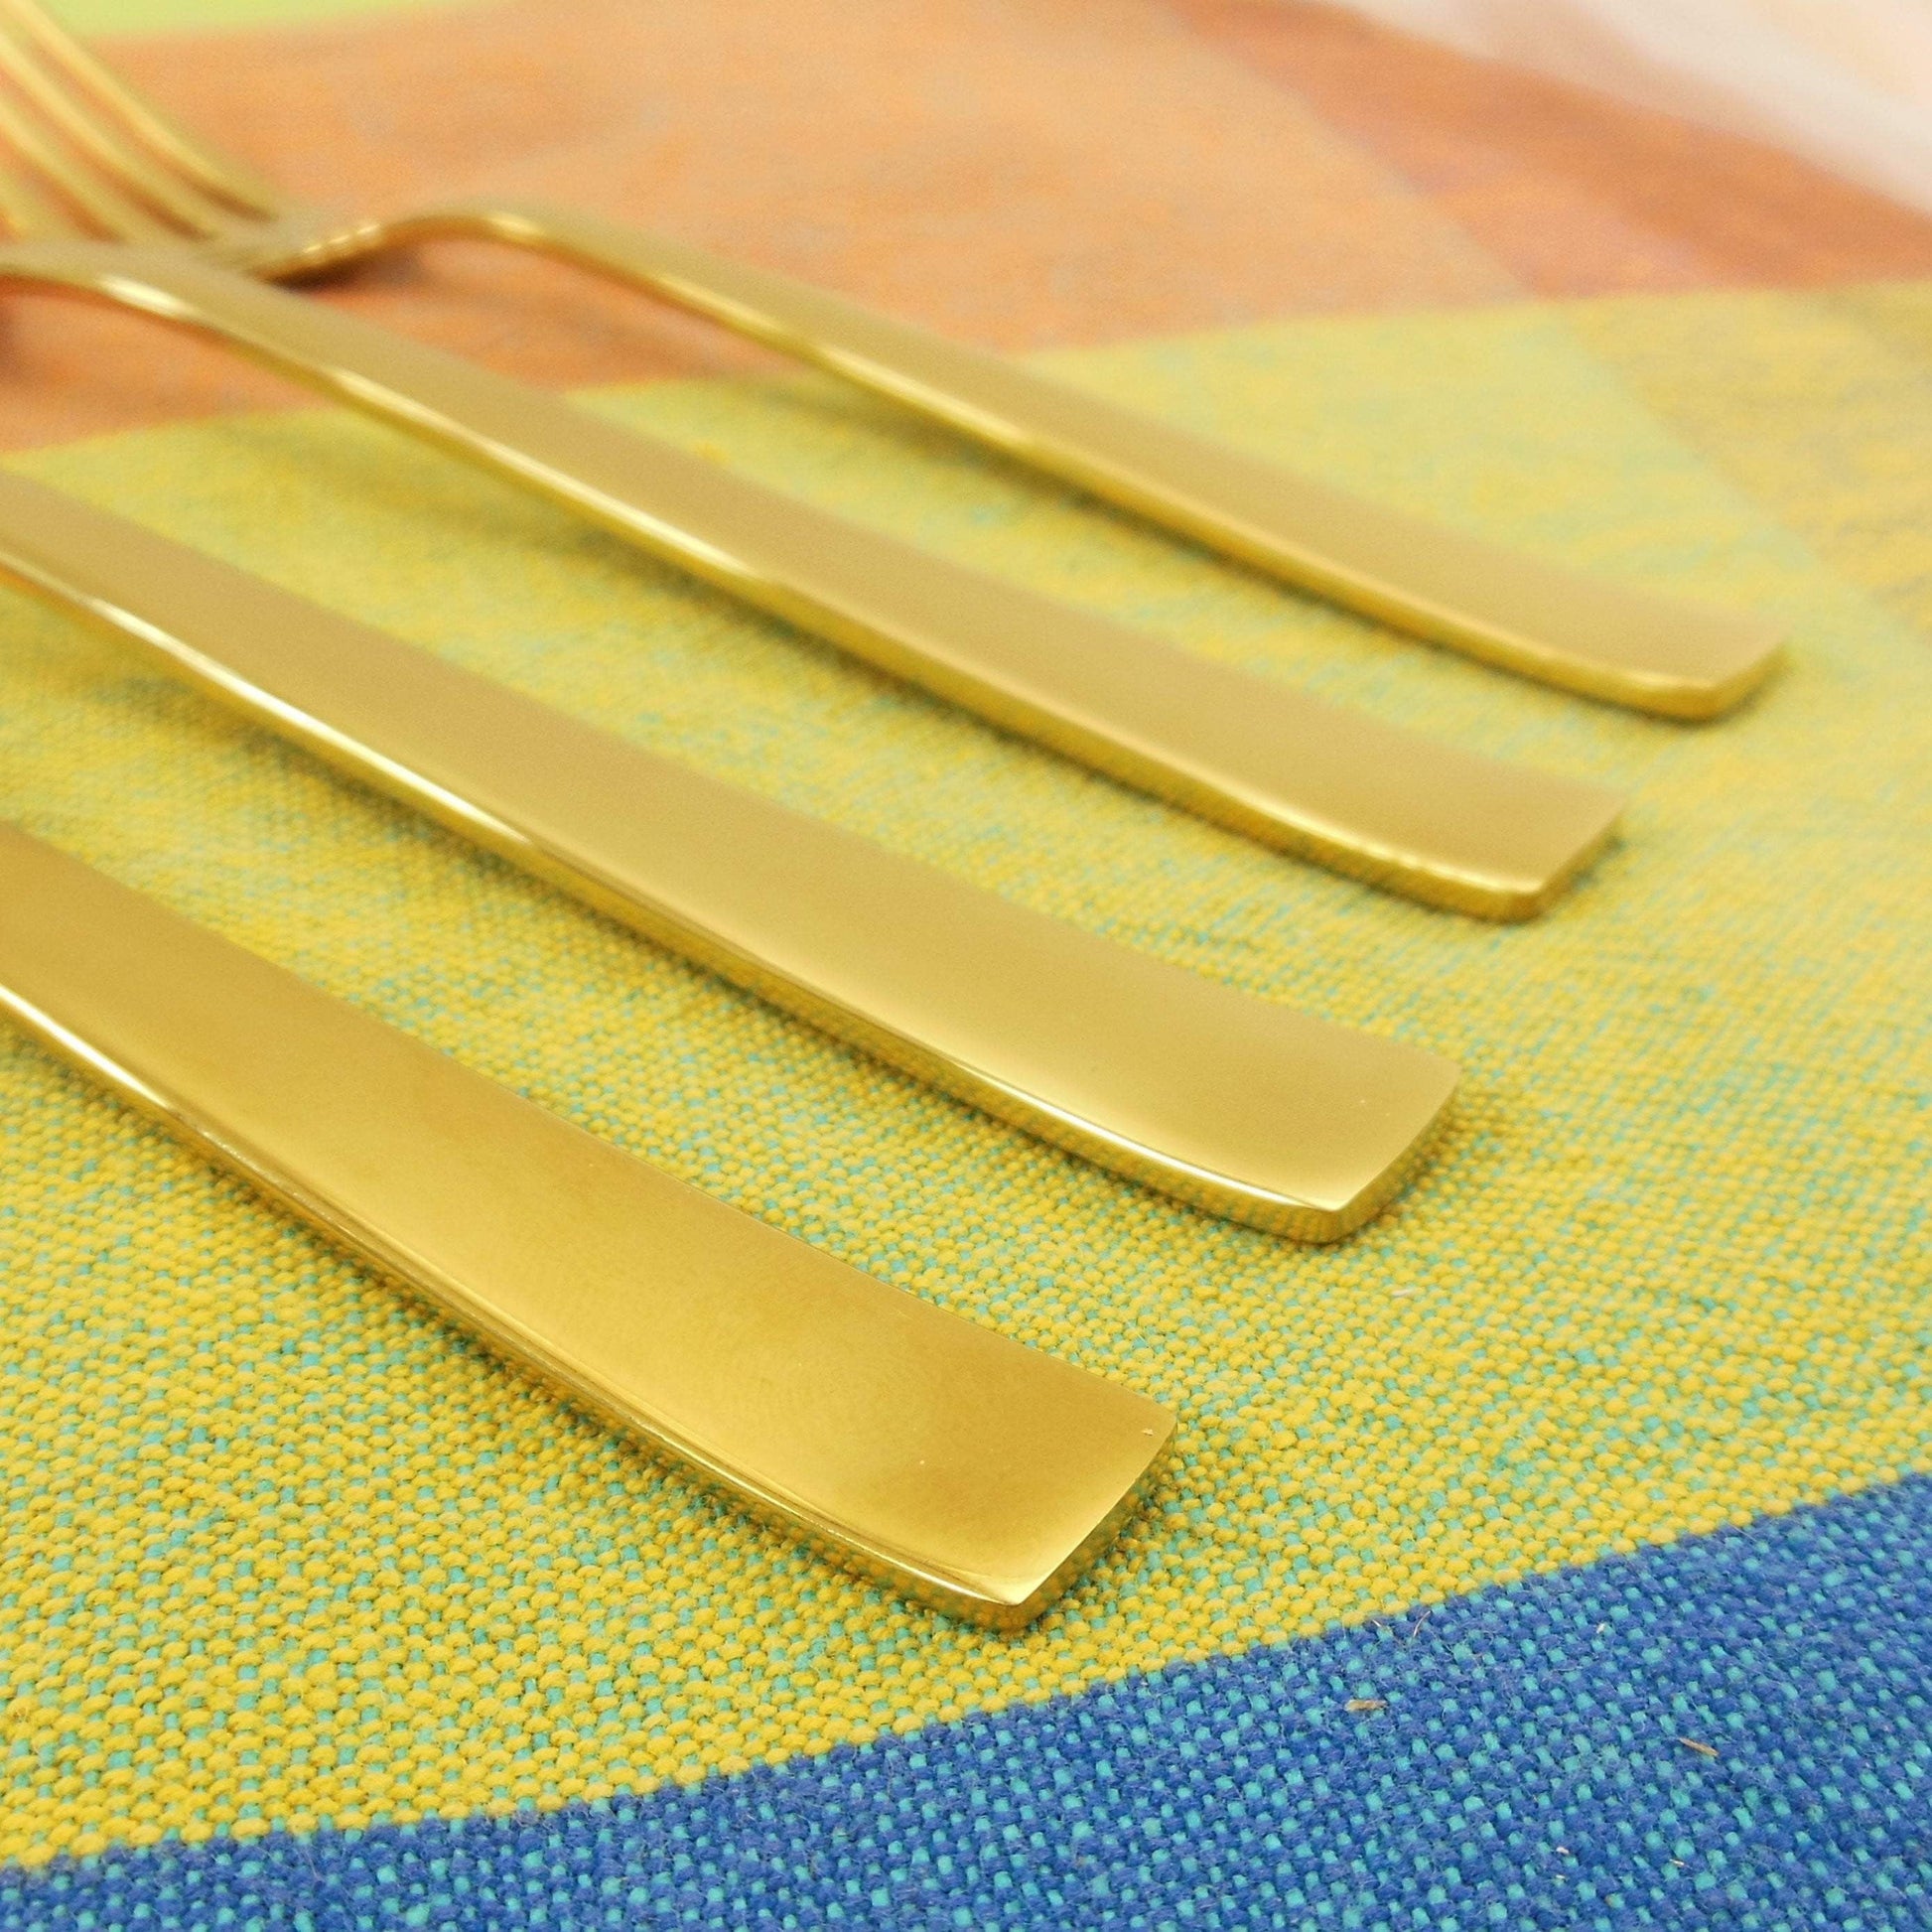 Cambridge Silversmiths Beacon Gold Shiny Forks Spoons New